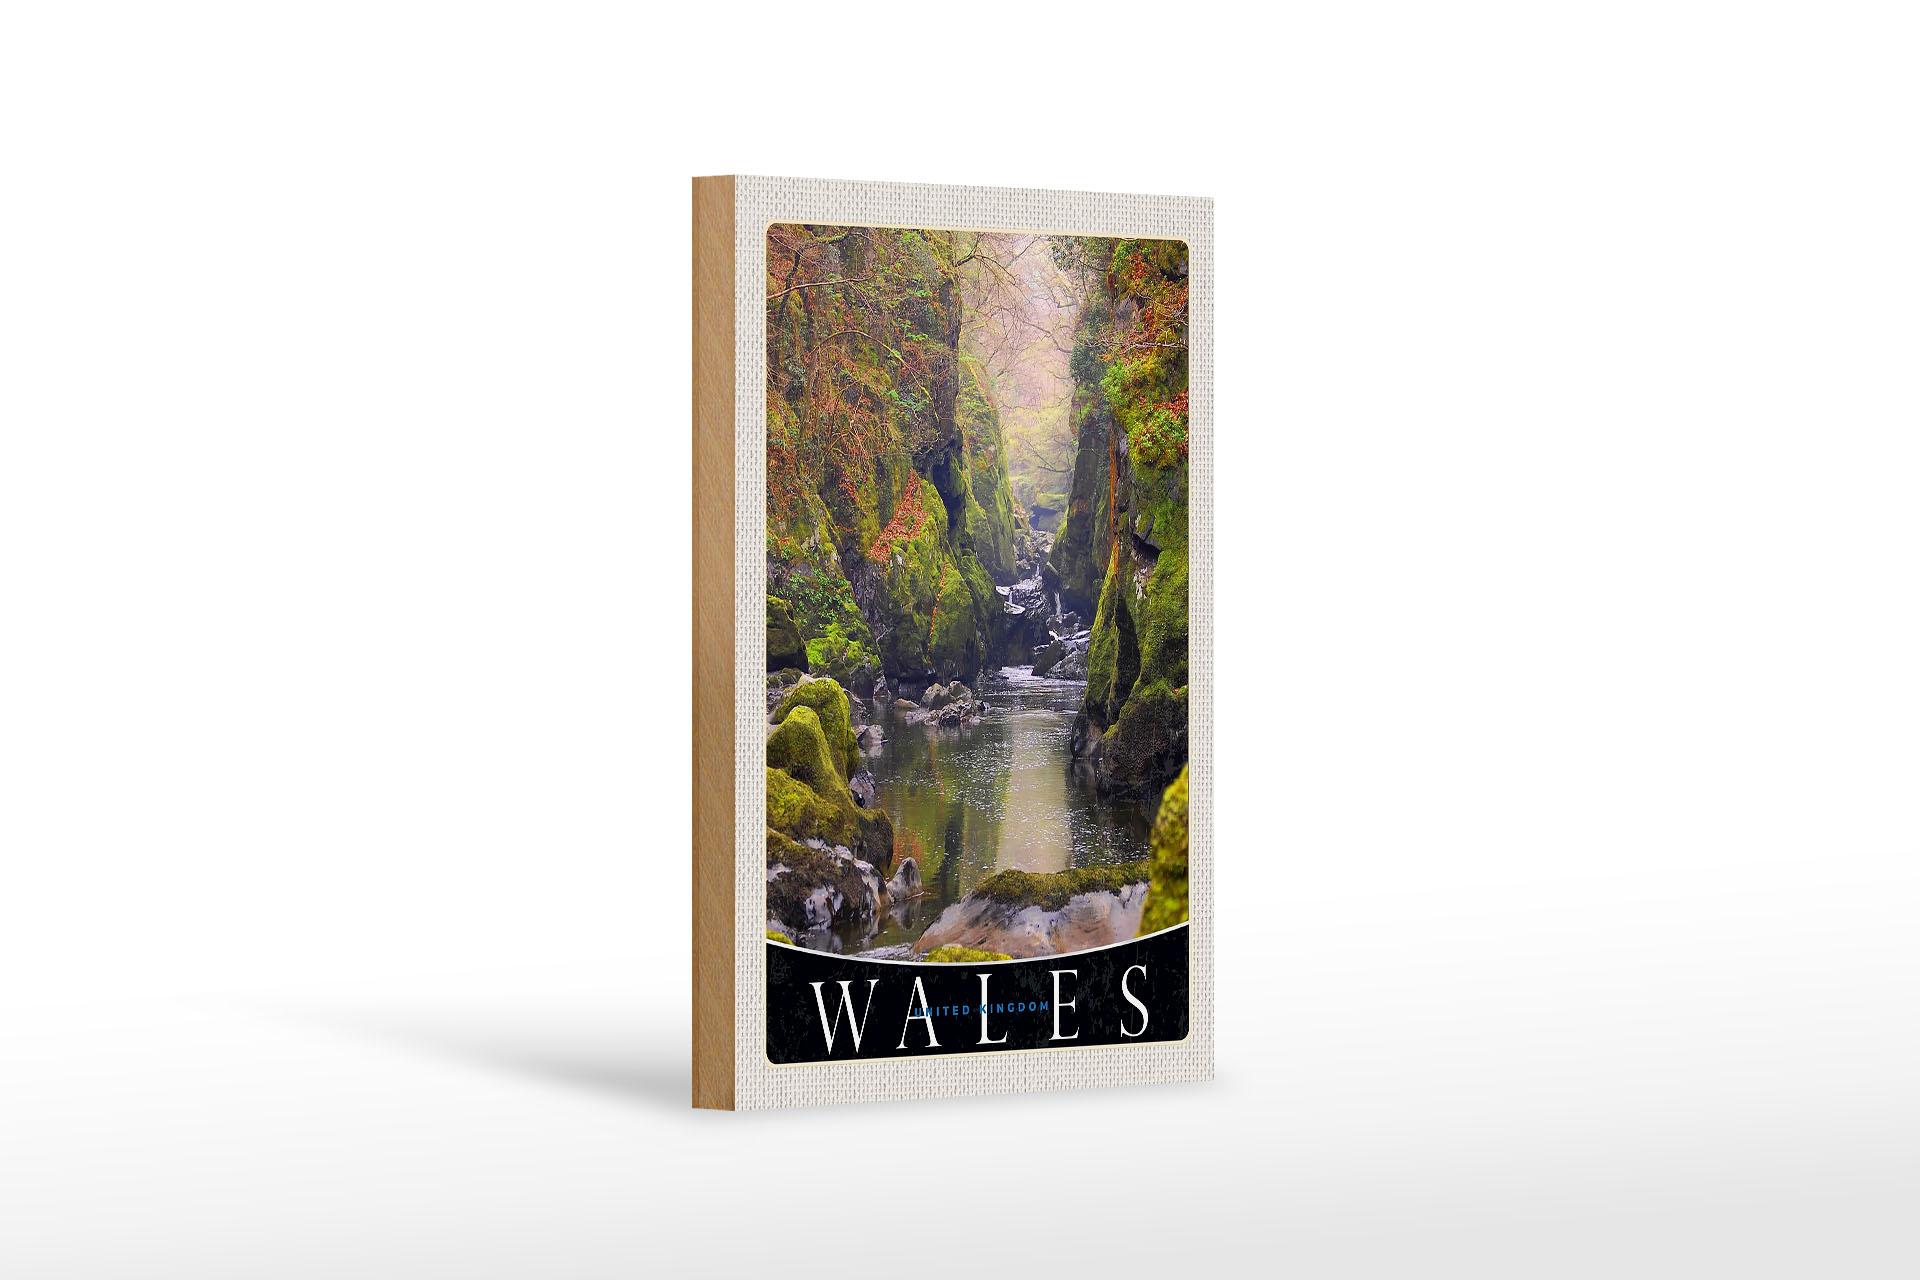 Holzschild Reise 12x18 cm Wales England Natur Fluss Wald Urlaub Schild